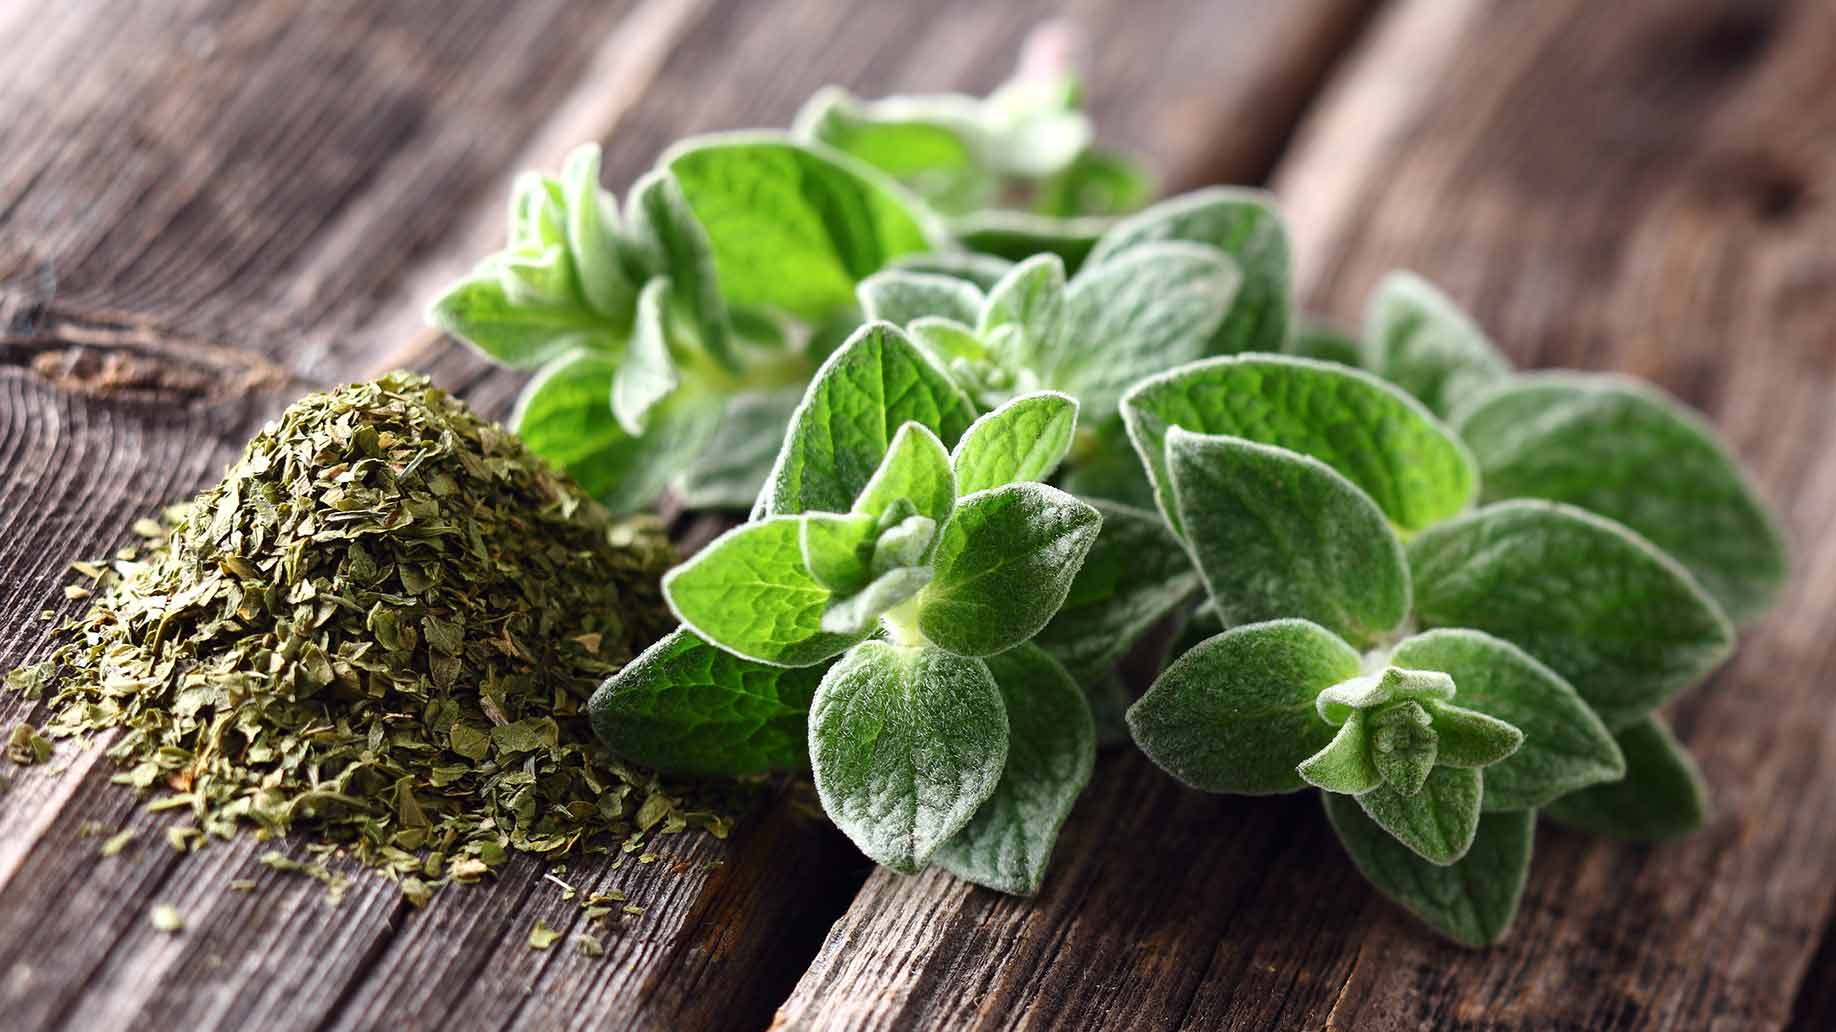 oregano essential oil herb leaves natural health remedies antibacterial antifungal food poisoning cold cough flu